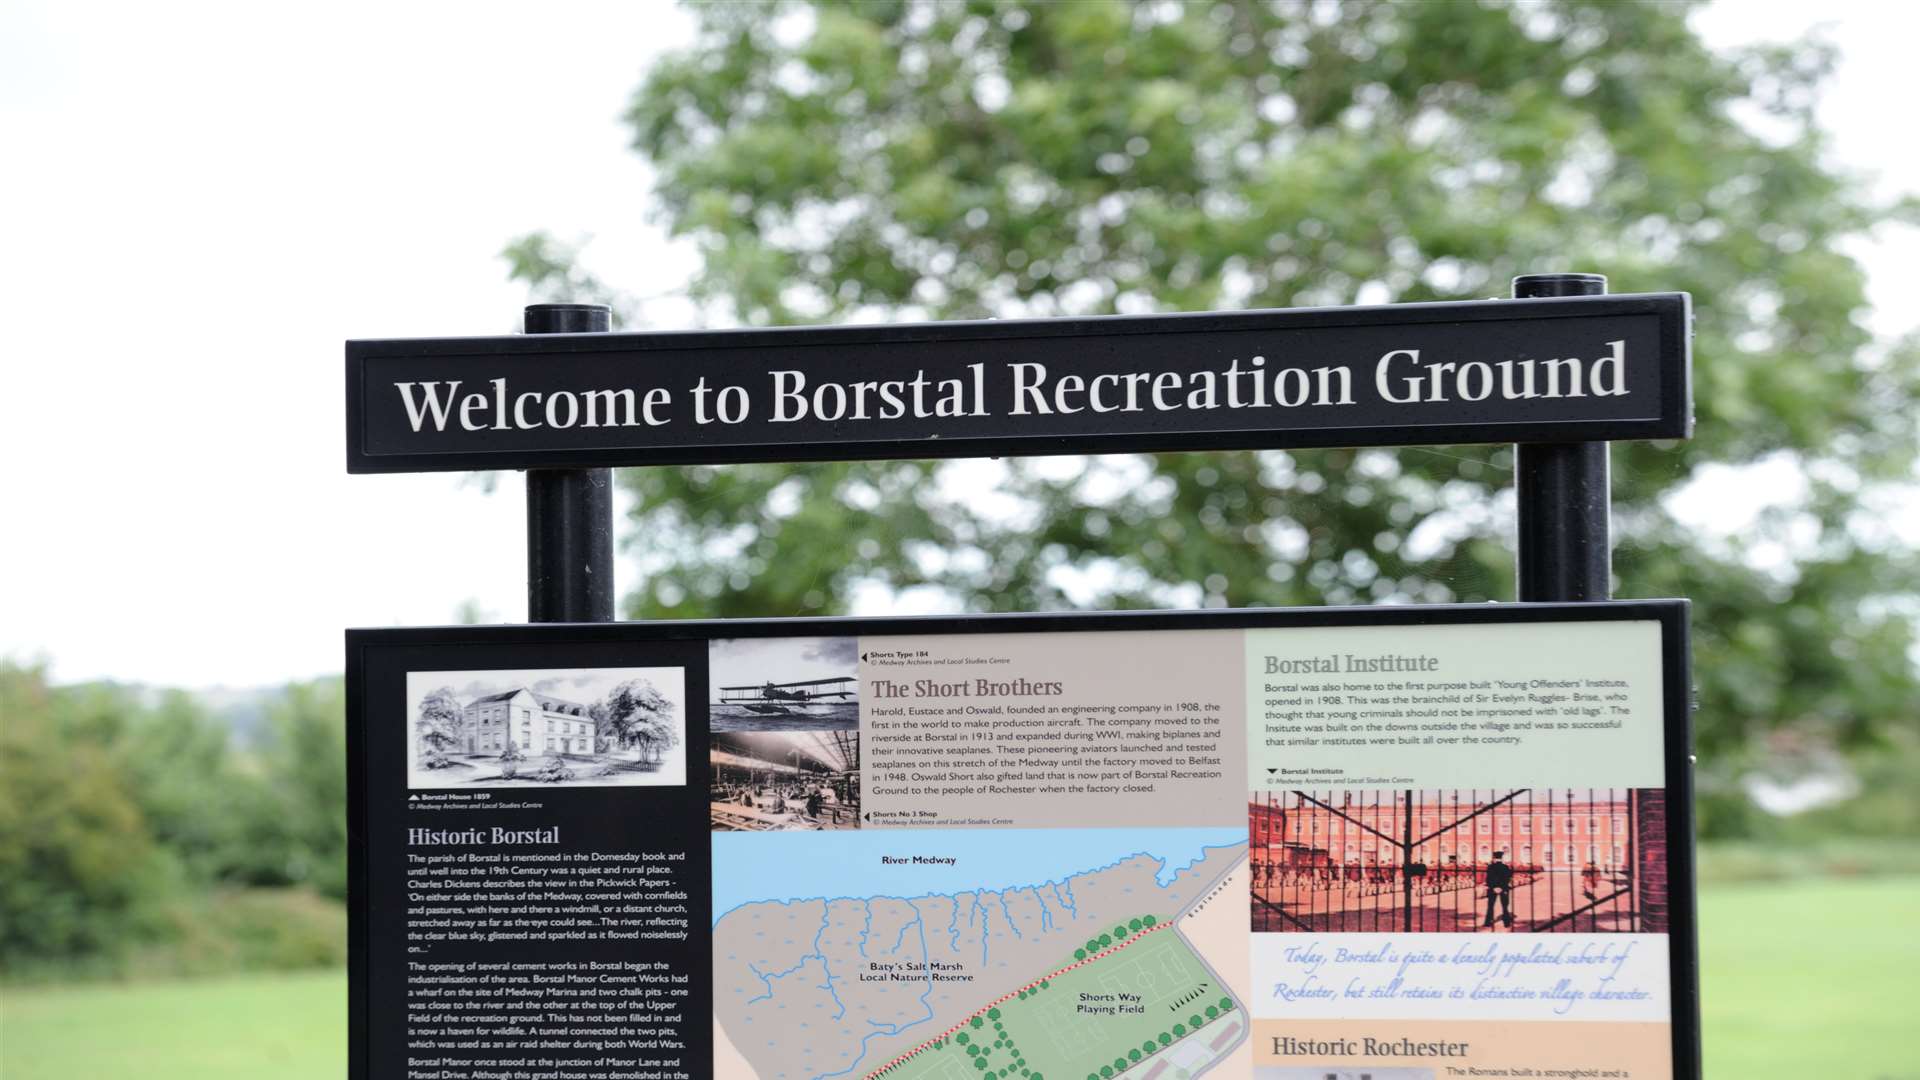 Bortstal Recreation Ground